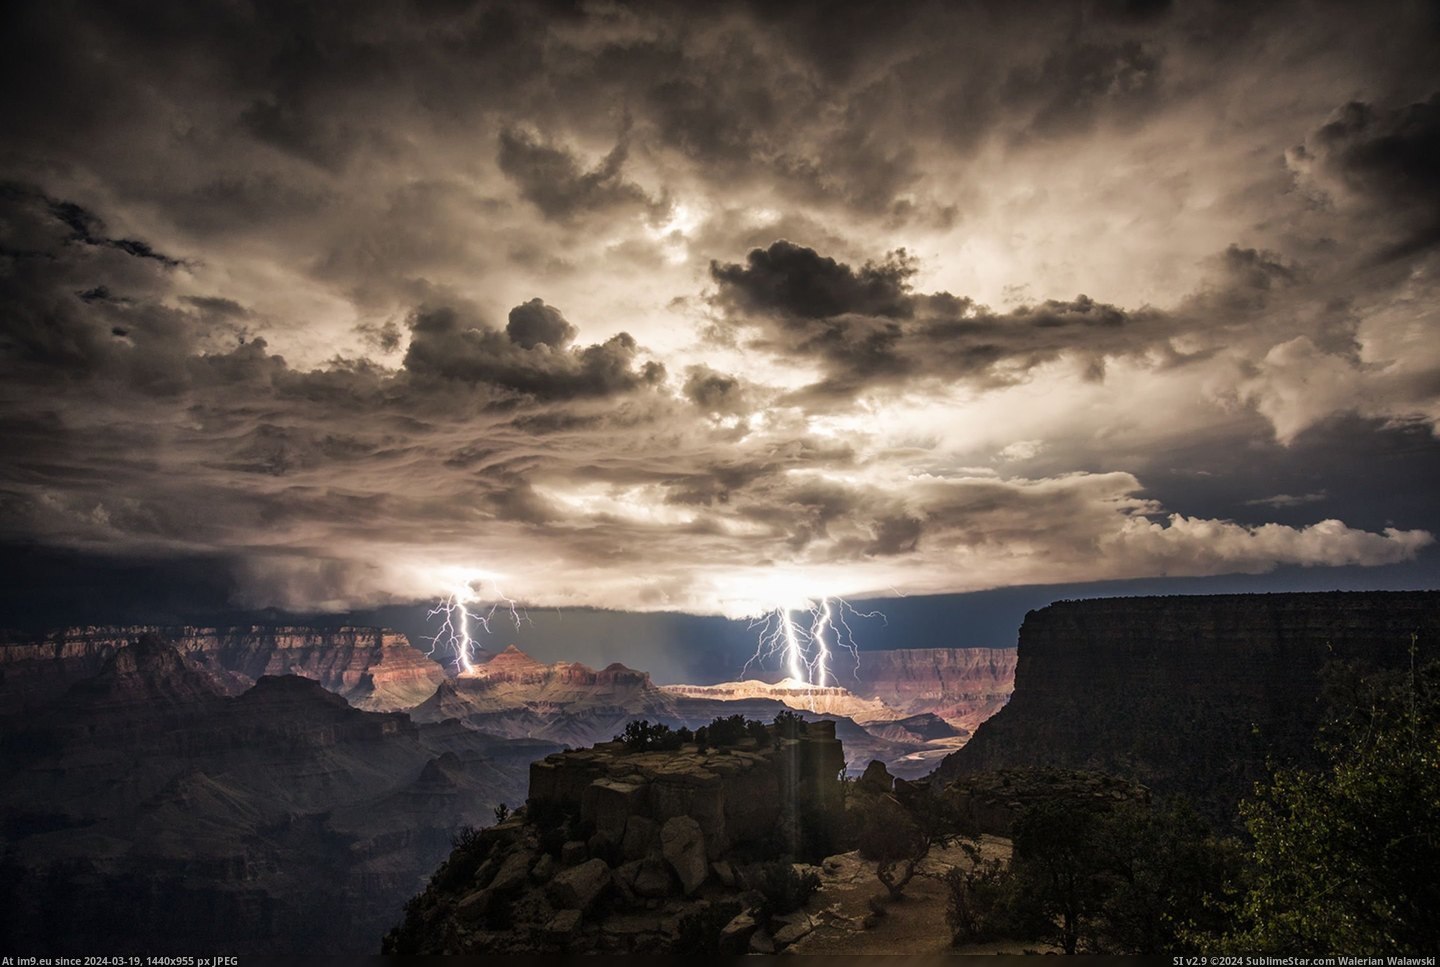 #Canyon #Thunderstorm #Nighttime #Grand [Pics] Nighttime thunderstorm over the Grand Canyon Pic. (Изображение из альбом My r/PICS favs))